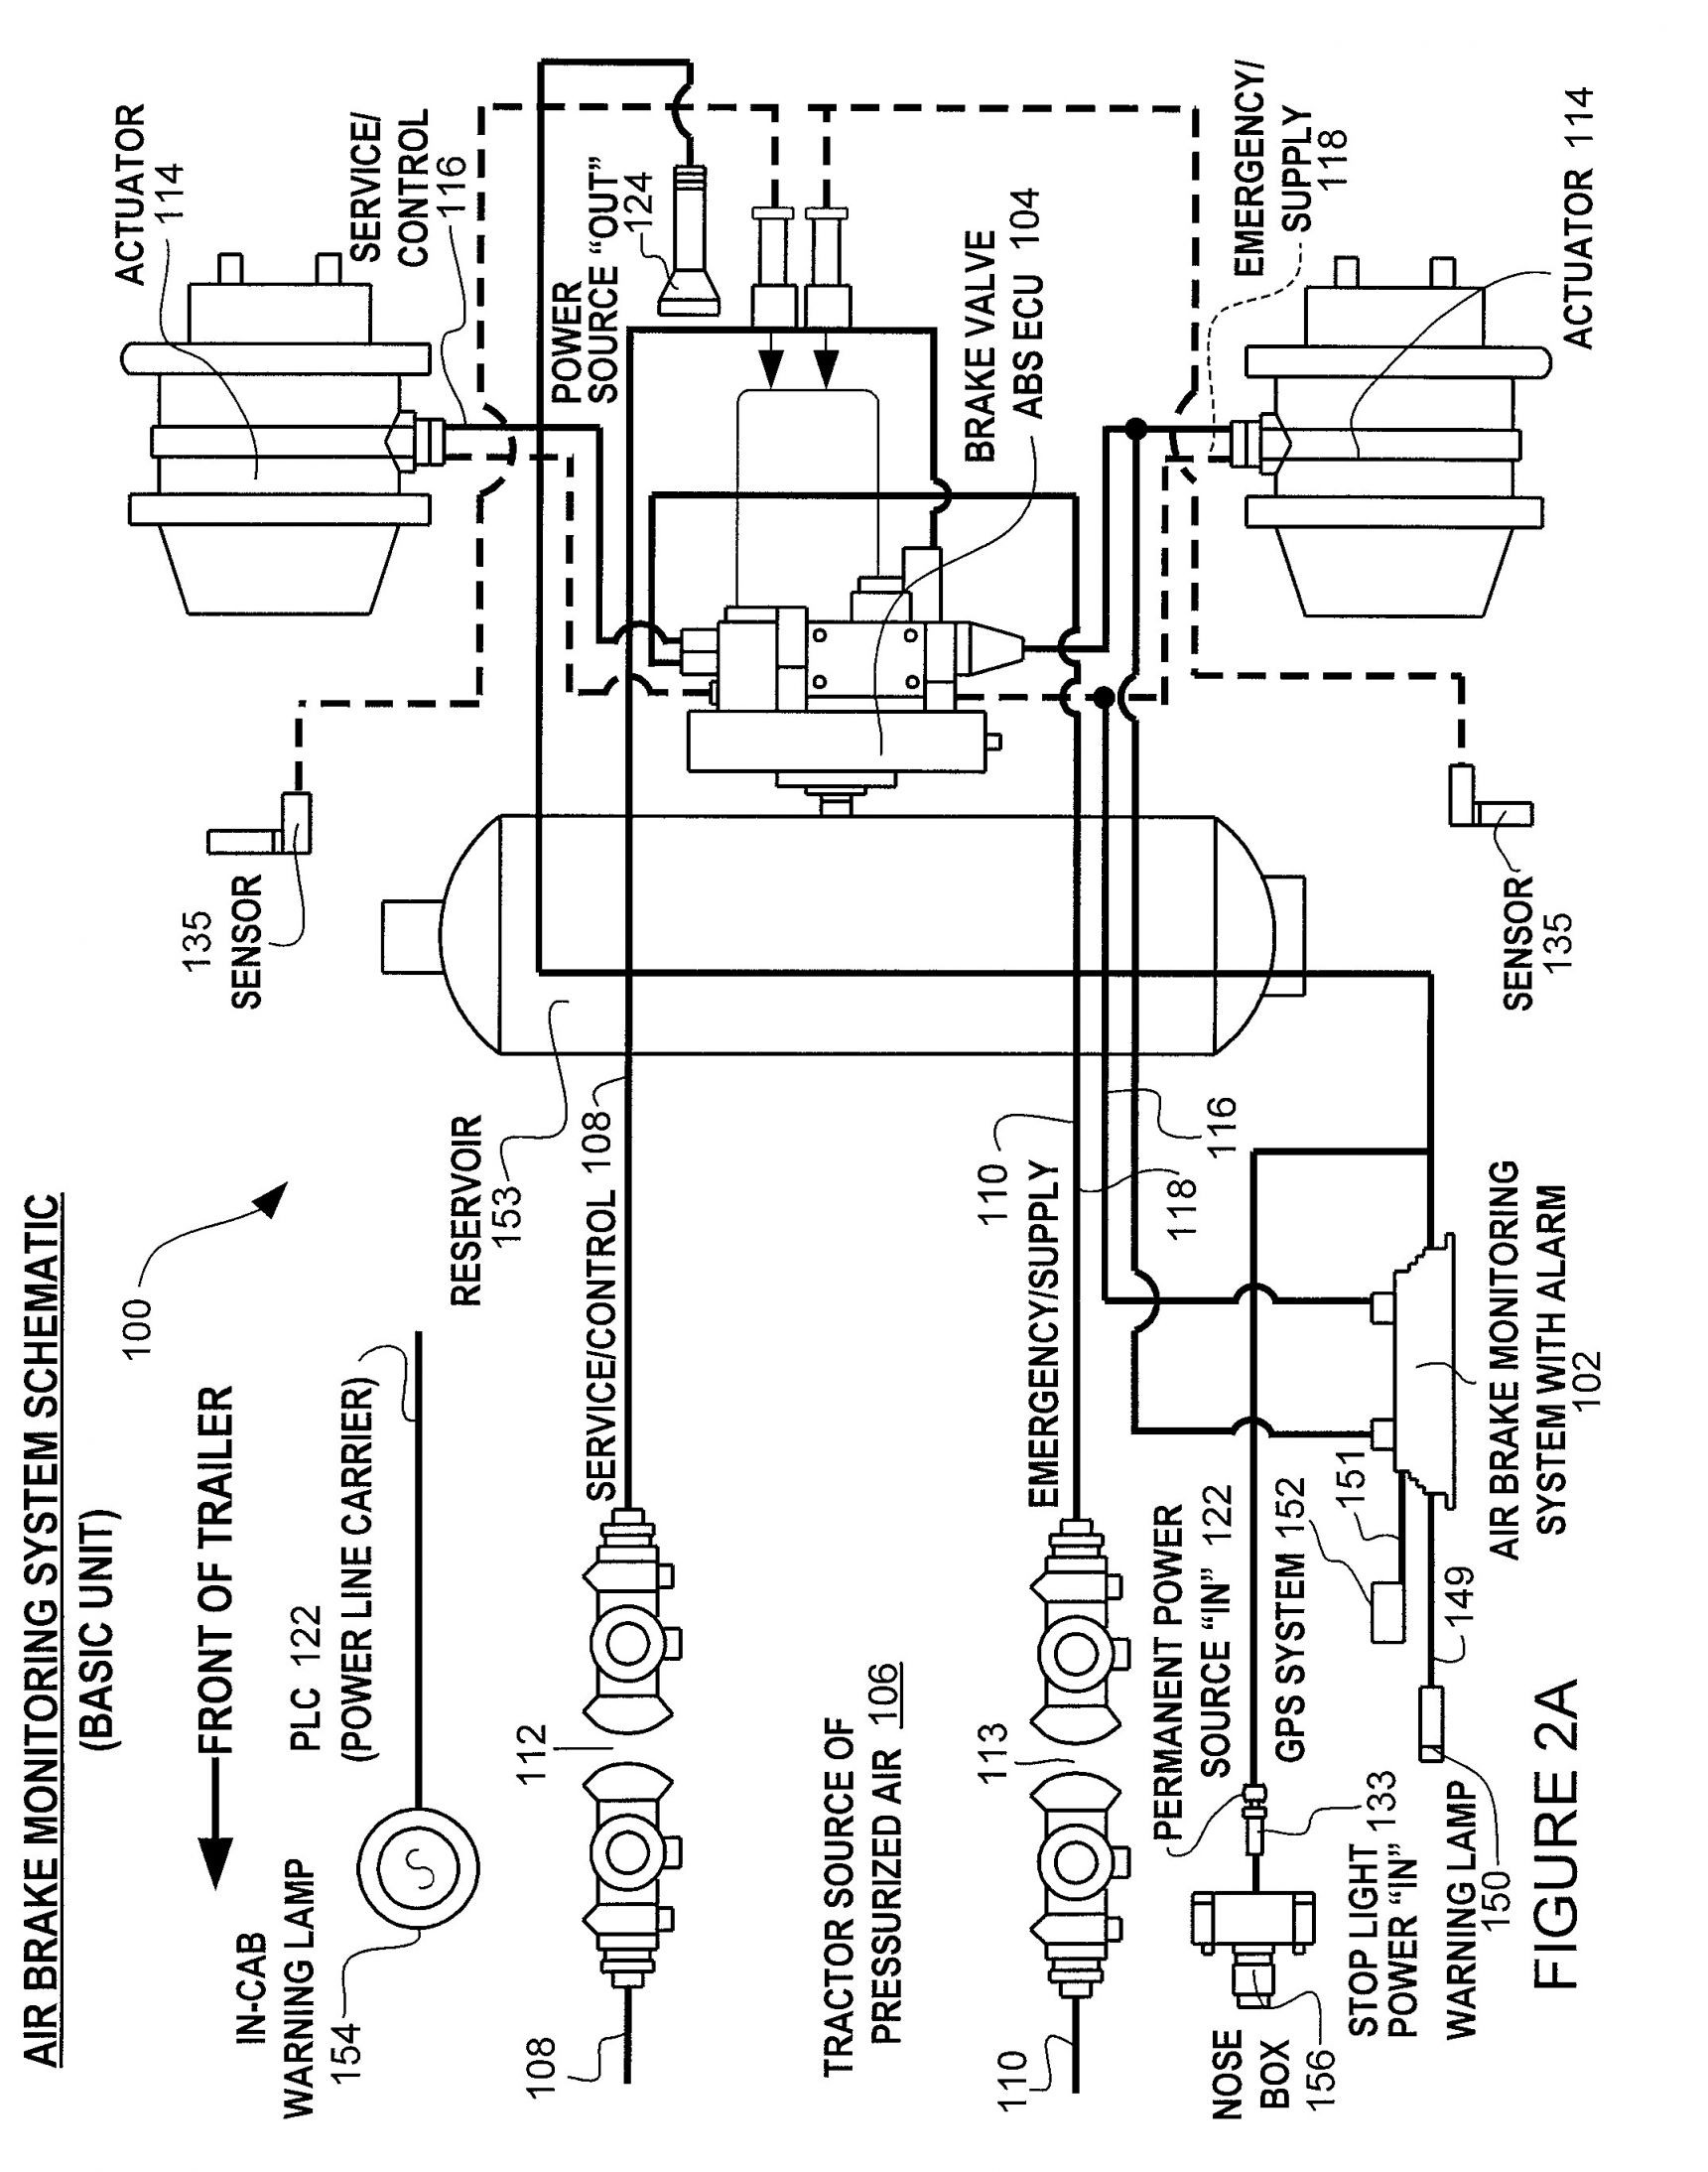 Truck Air Brake System Diagram Manual Greatest Truck Air Brake Diagram Qs65 – Documentaries for Change Of Truck Air Brake System Diagram Manual